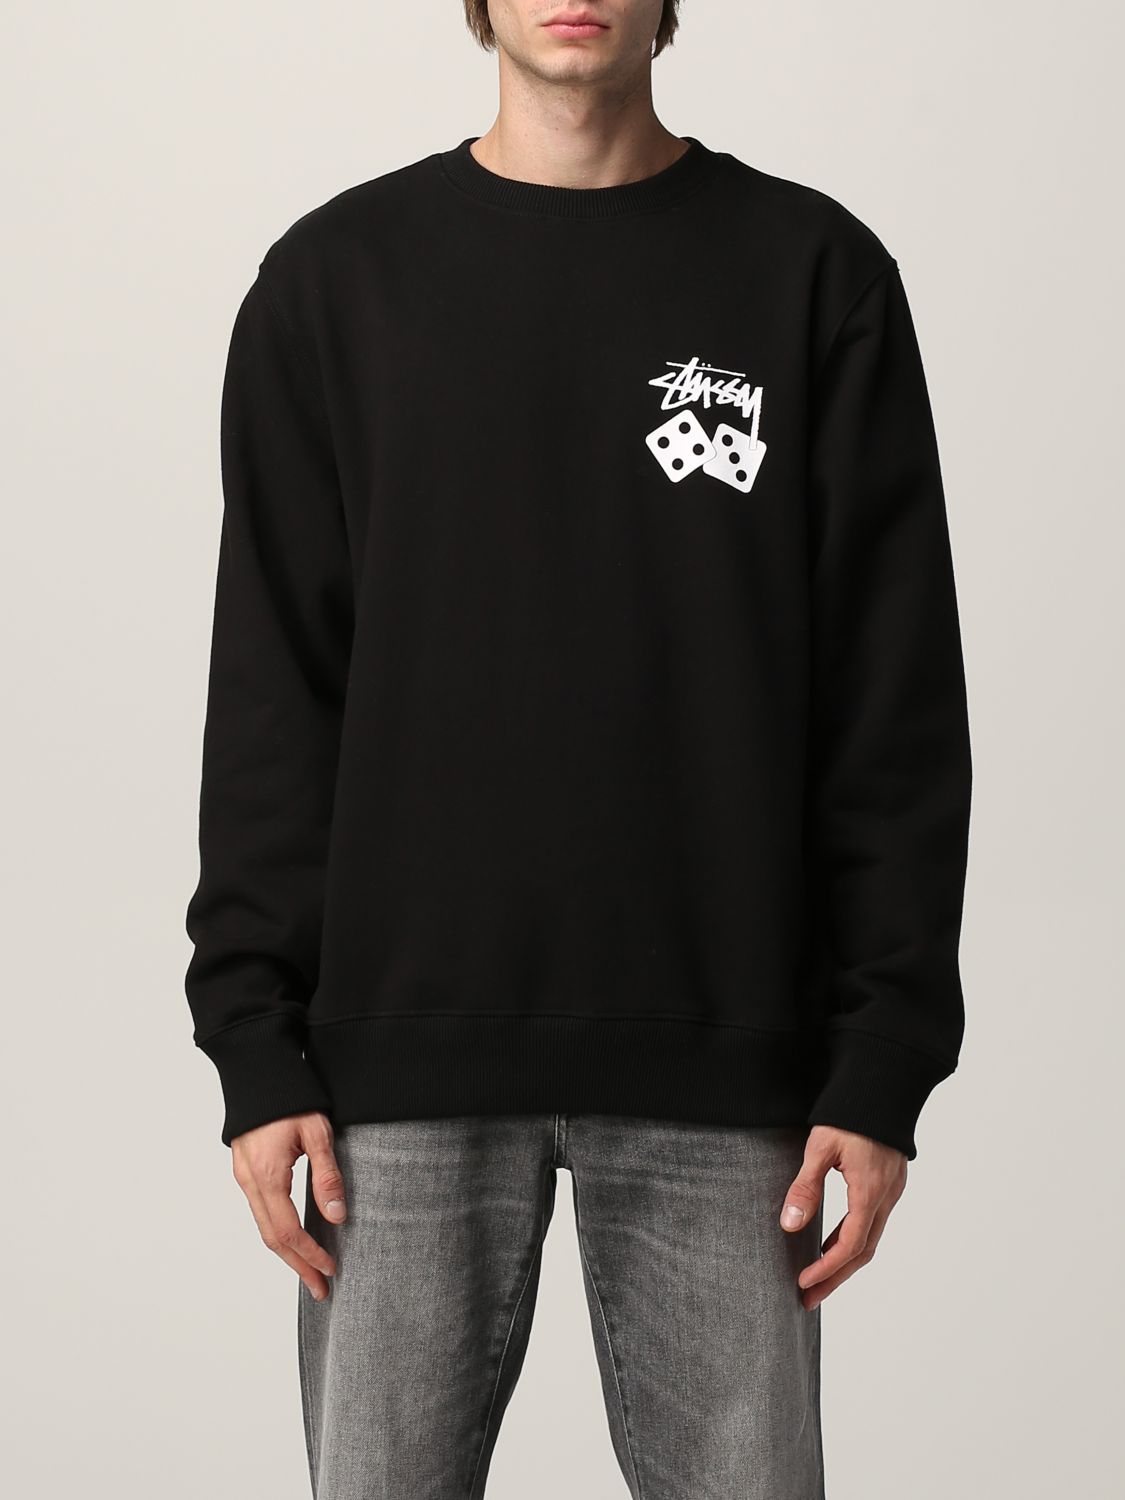 STUSSY: crewneck jumper with back logo - Black | Stussy sweatshirt ...